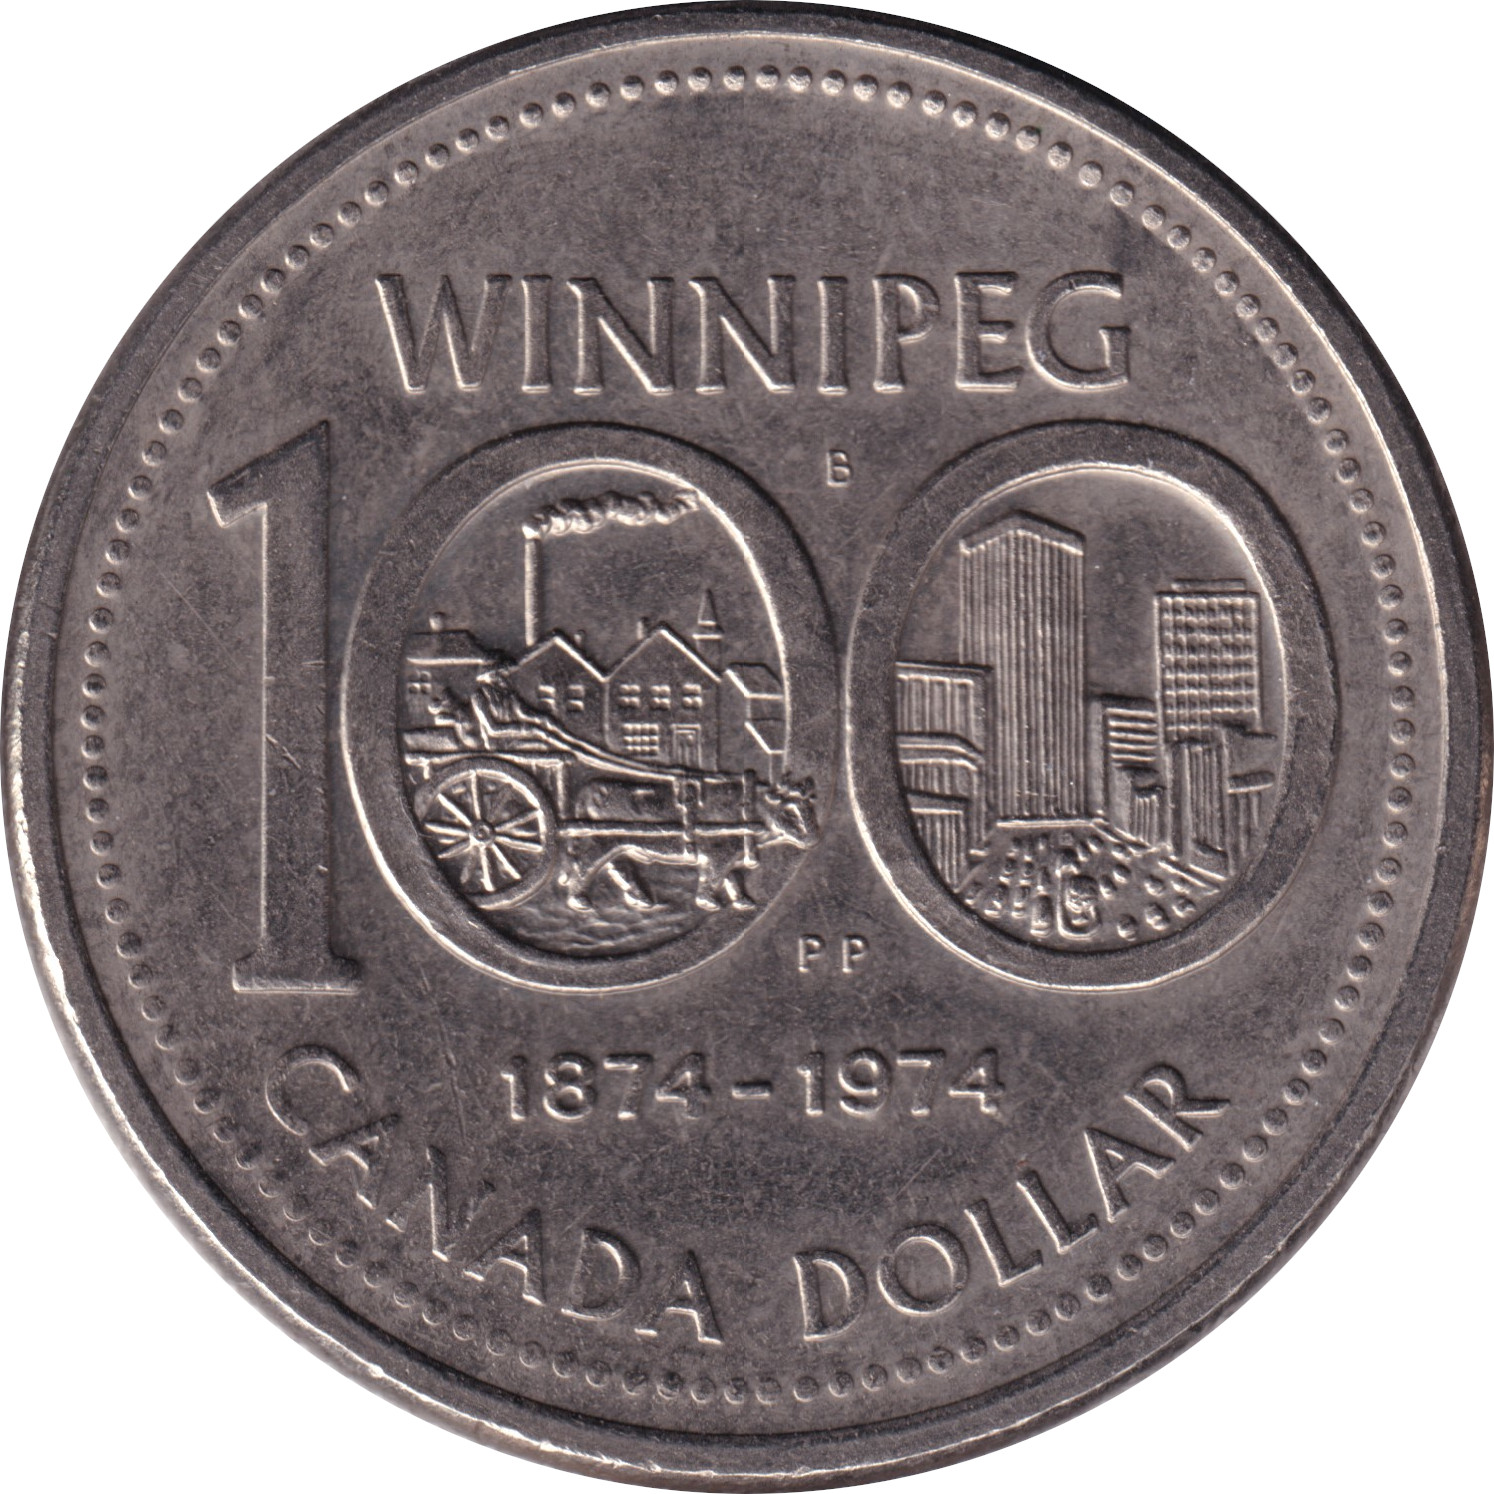 1 dollar - Winnipeg